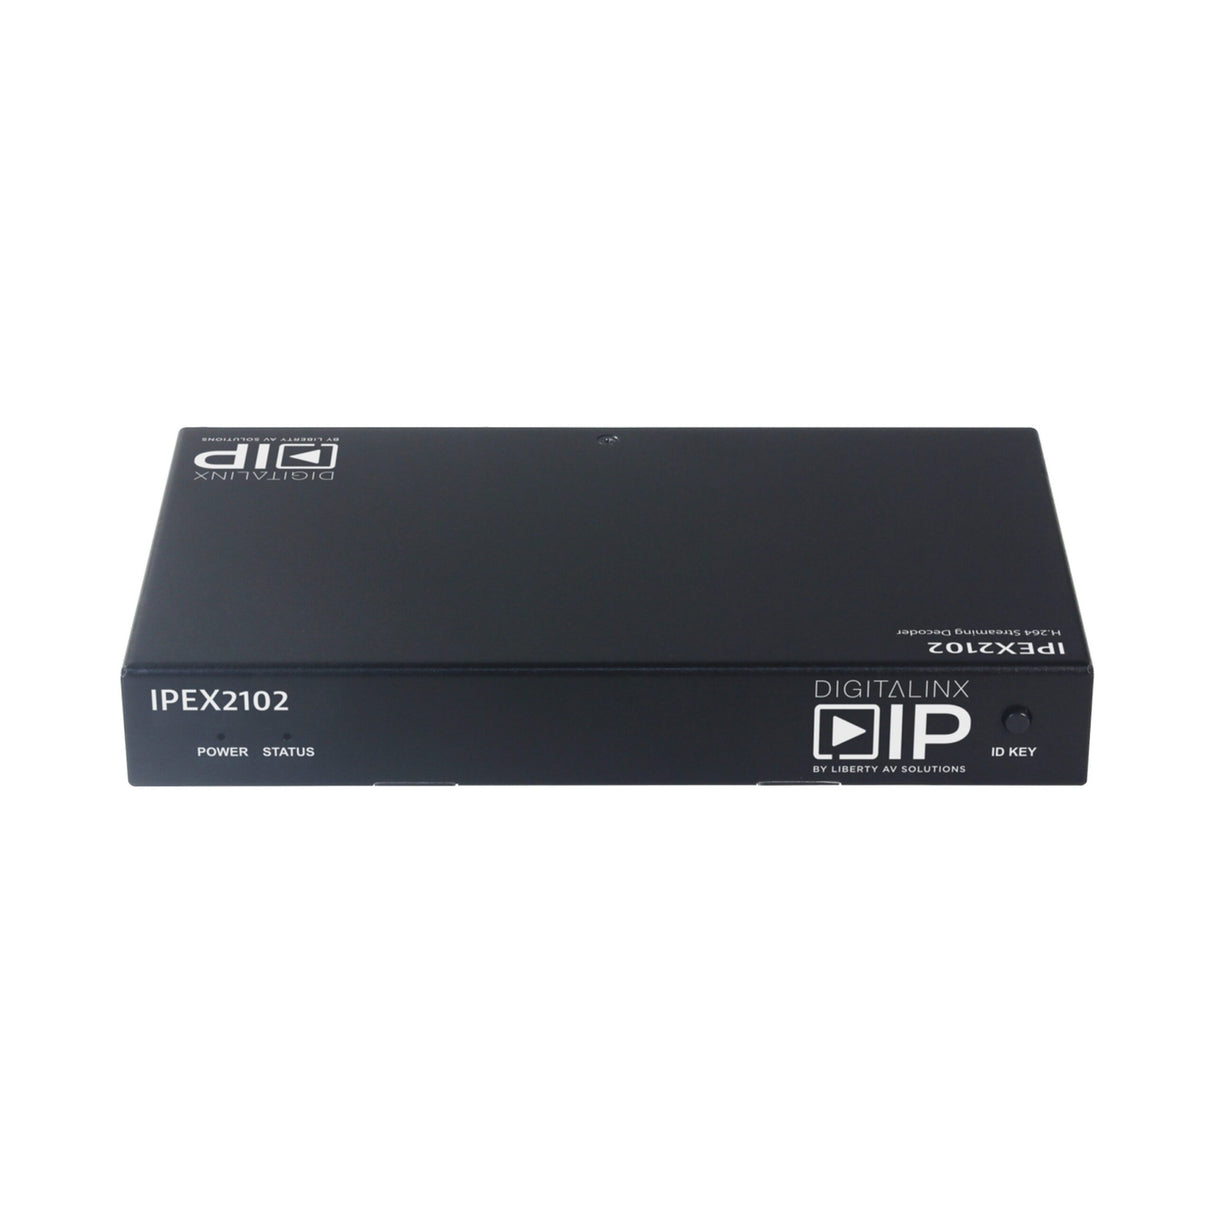 Digitalinx IPEX2102 H.264 HDMI/IP Decoder with PoE